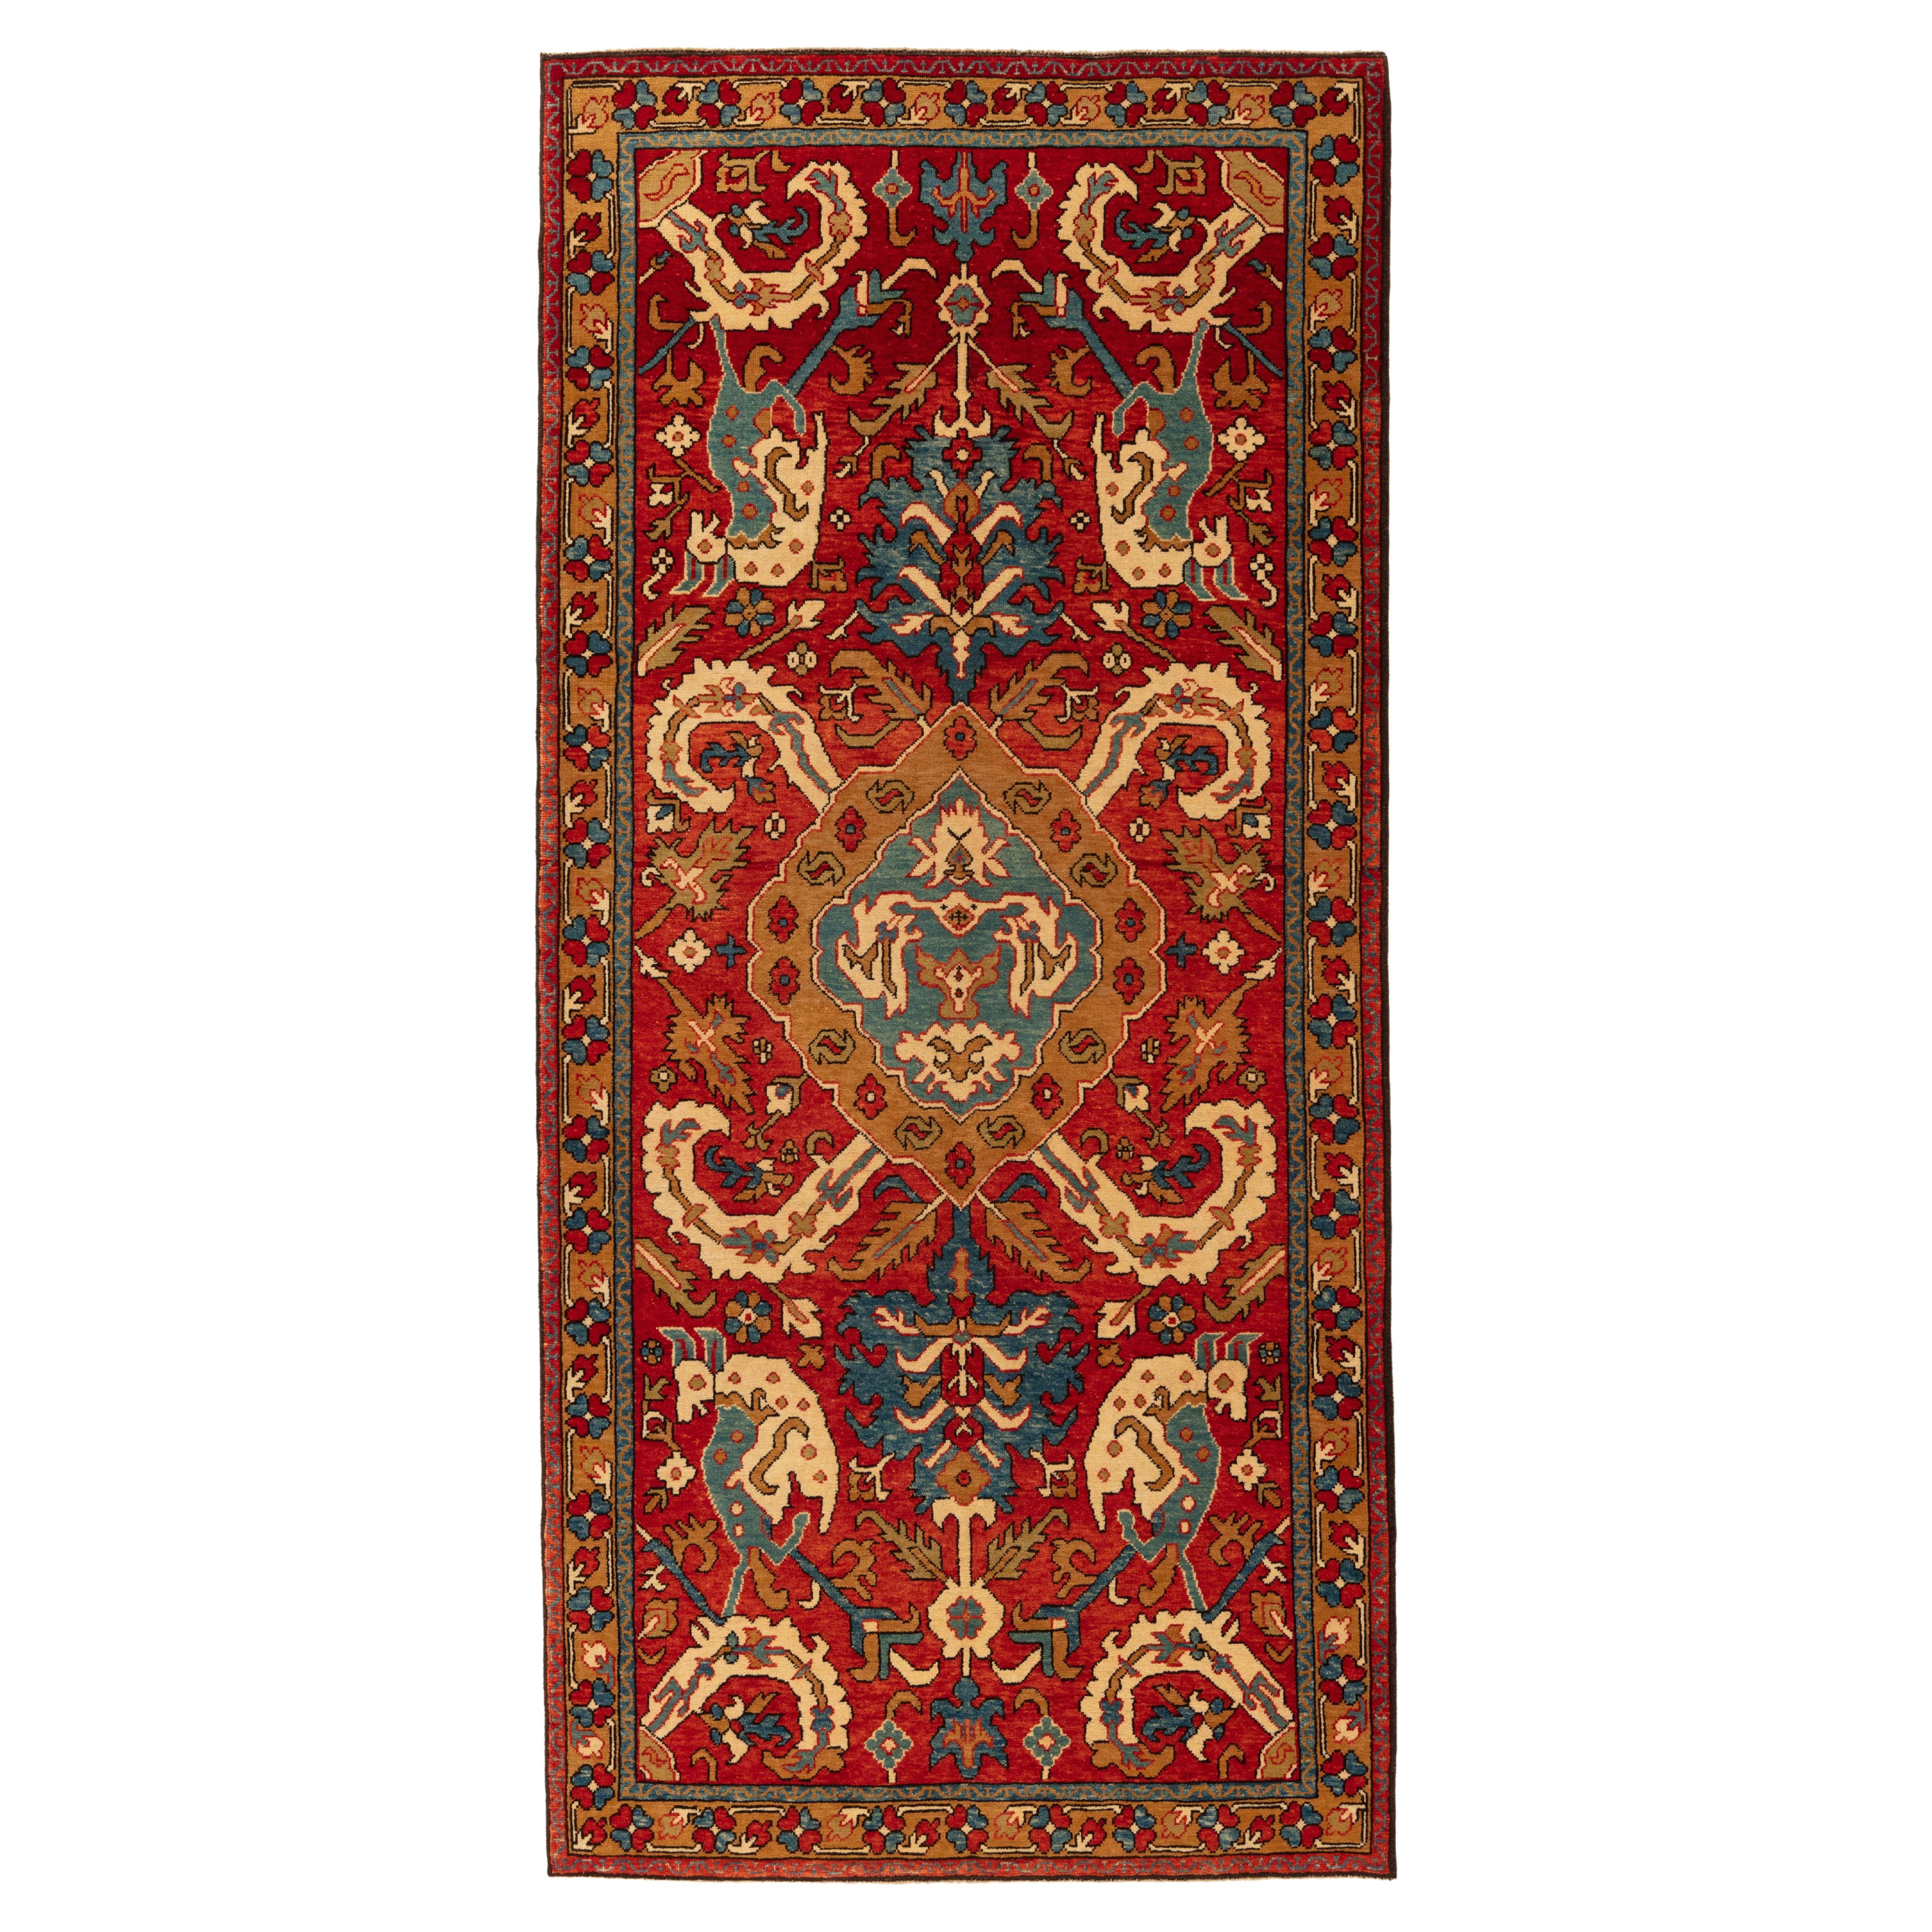 Ararat Rugs Dragon Rug, Antique Caucasian Revival Carpet, Natural Dyed For Sale